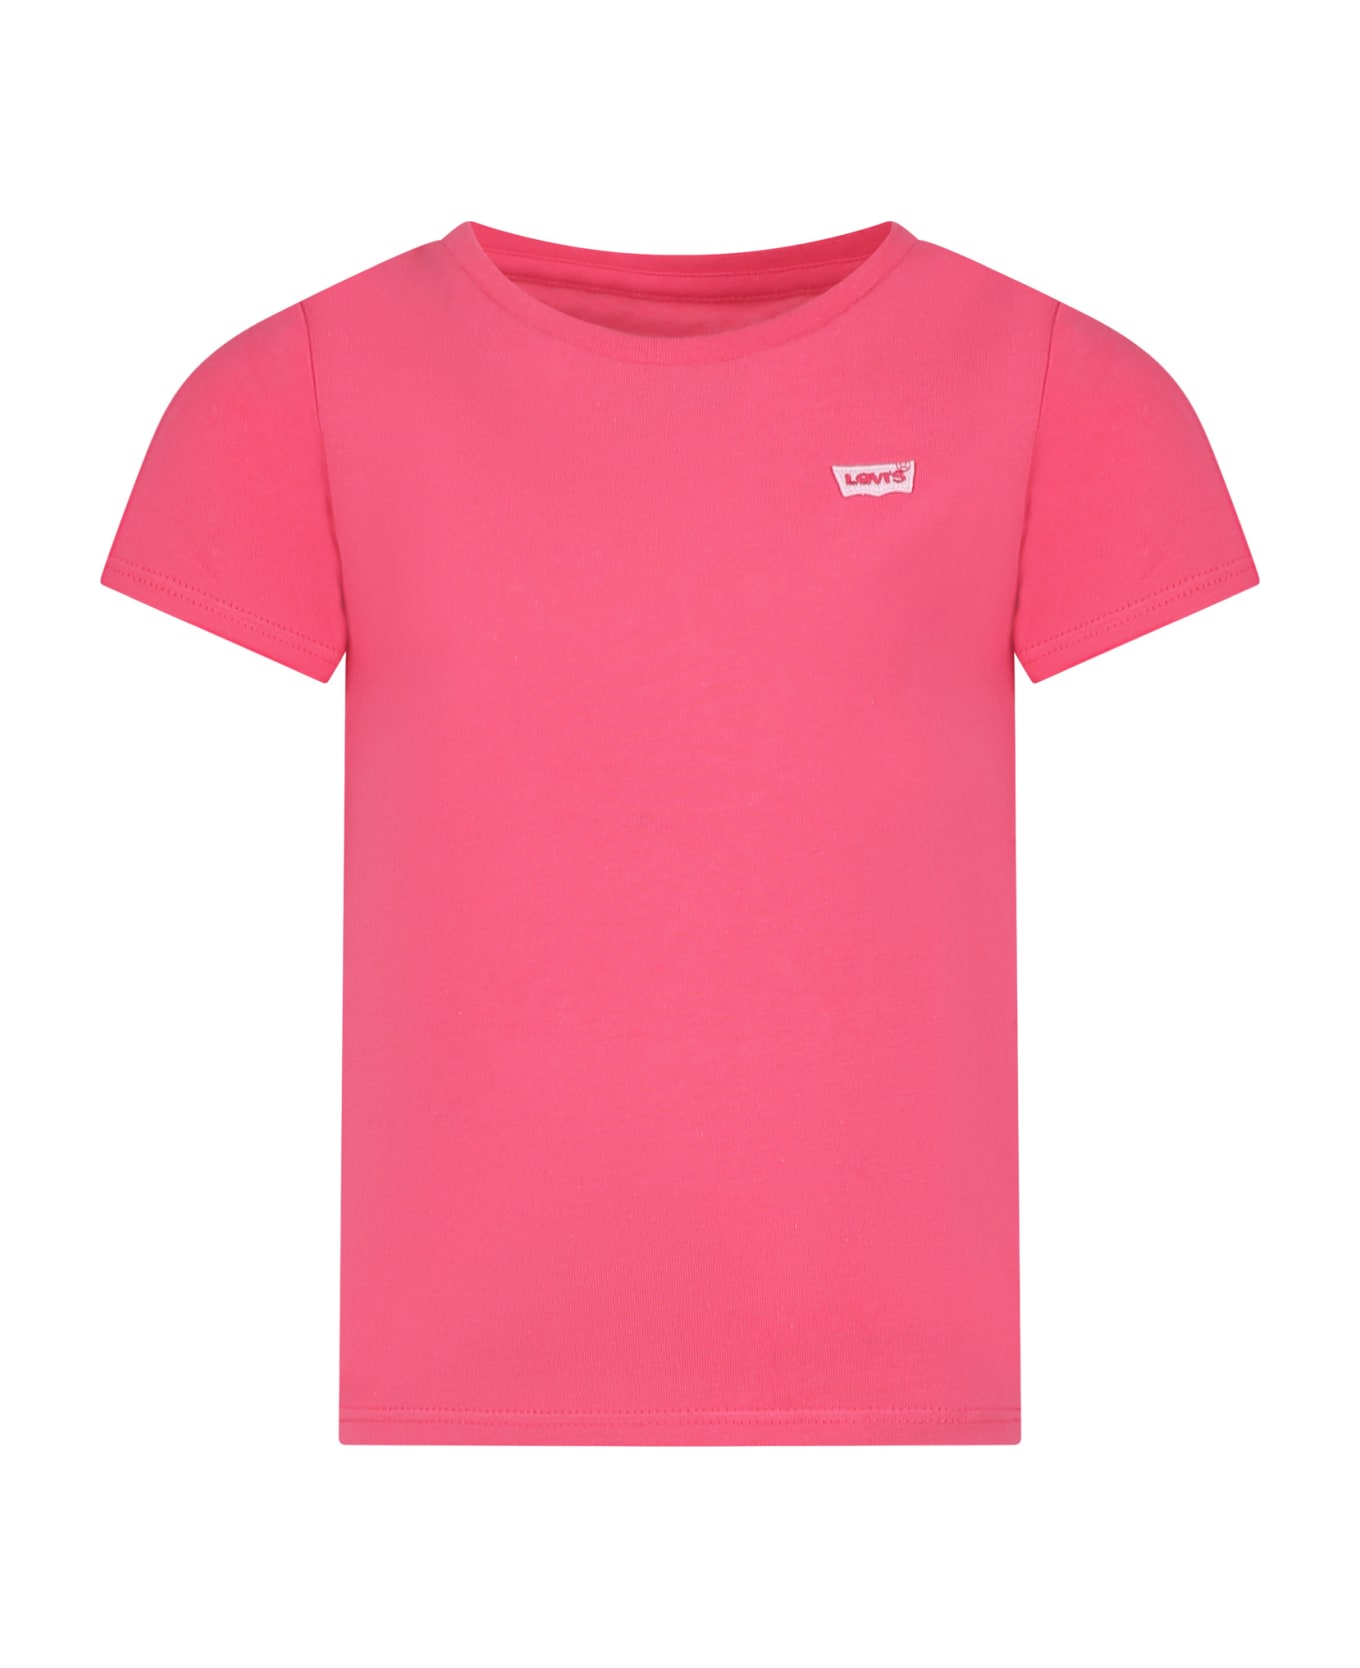 Levi's Fuchsia T-shirt For Girl With Logo - Fuchsia